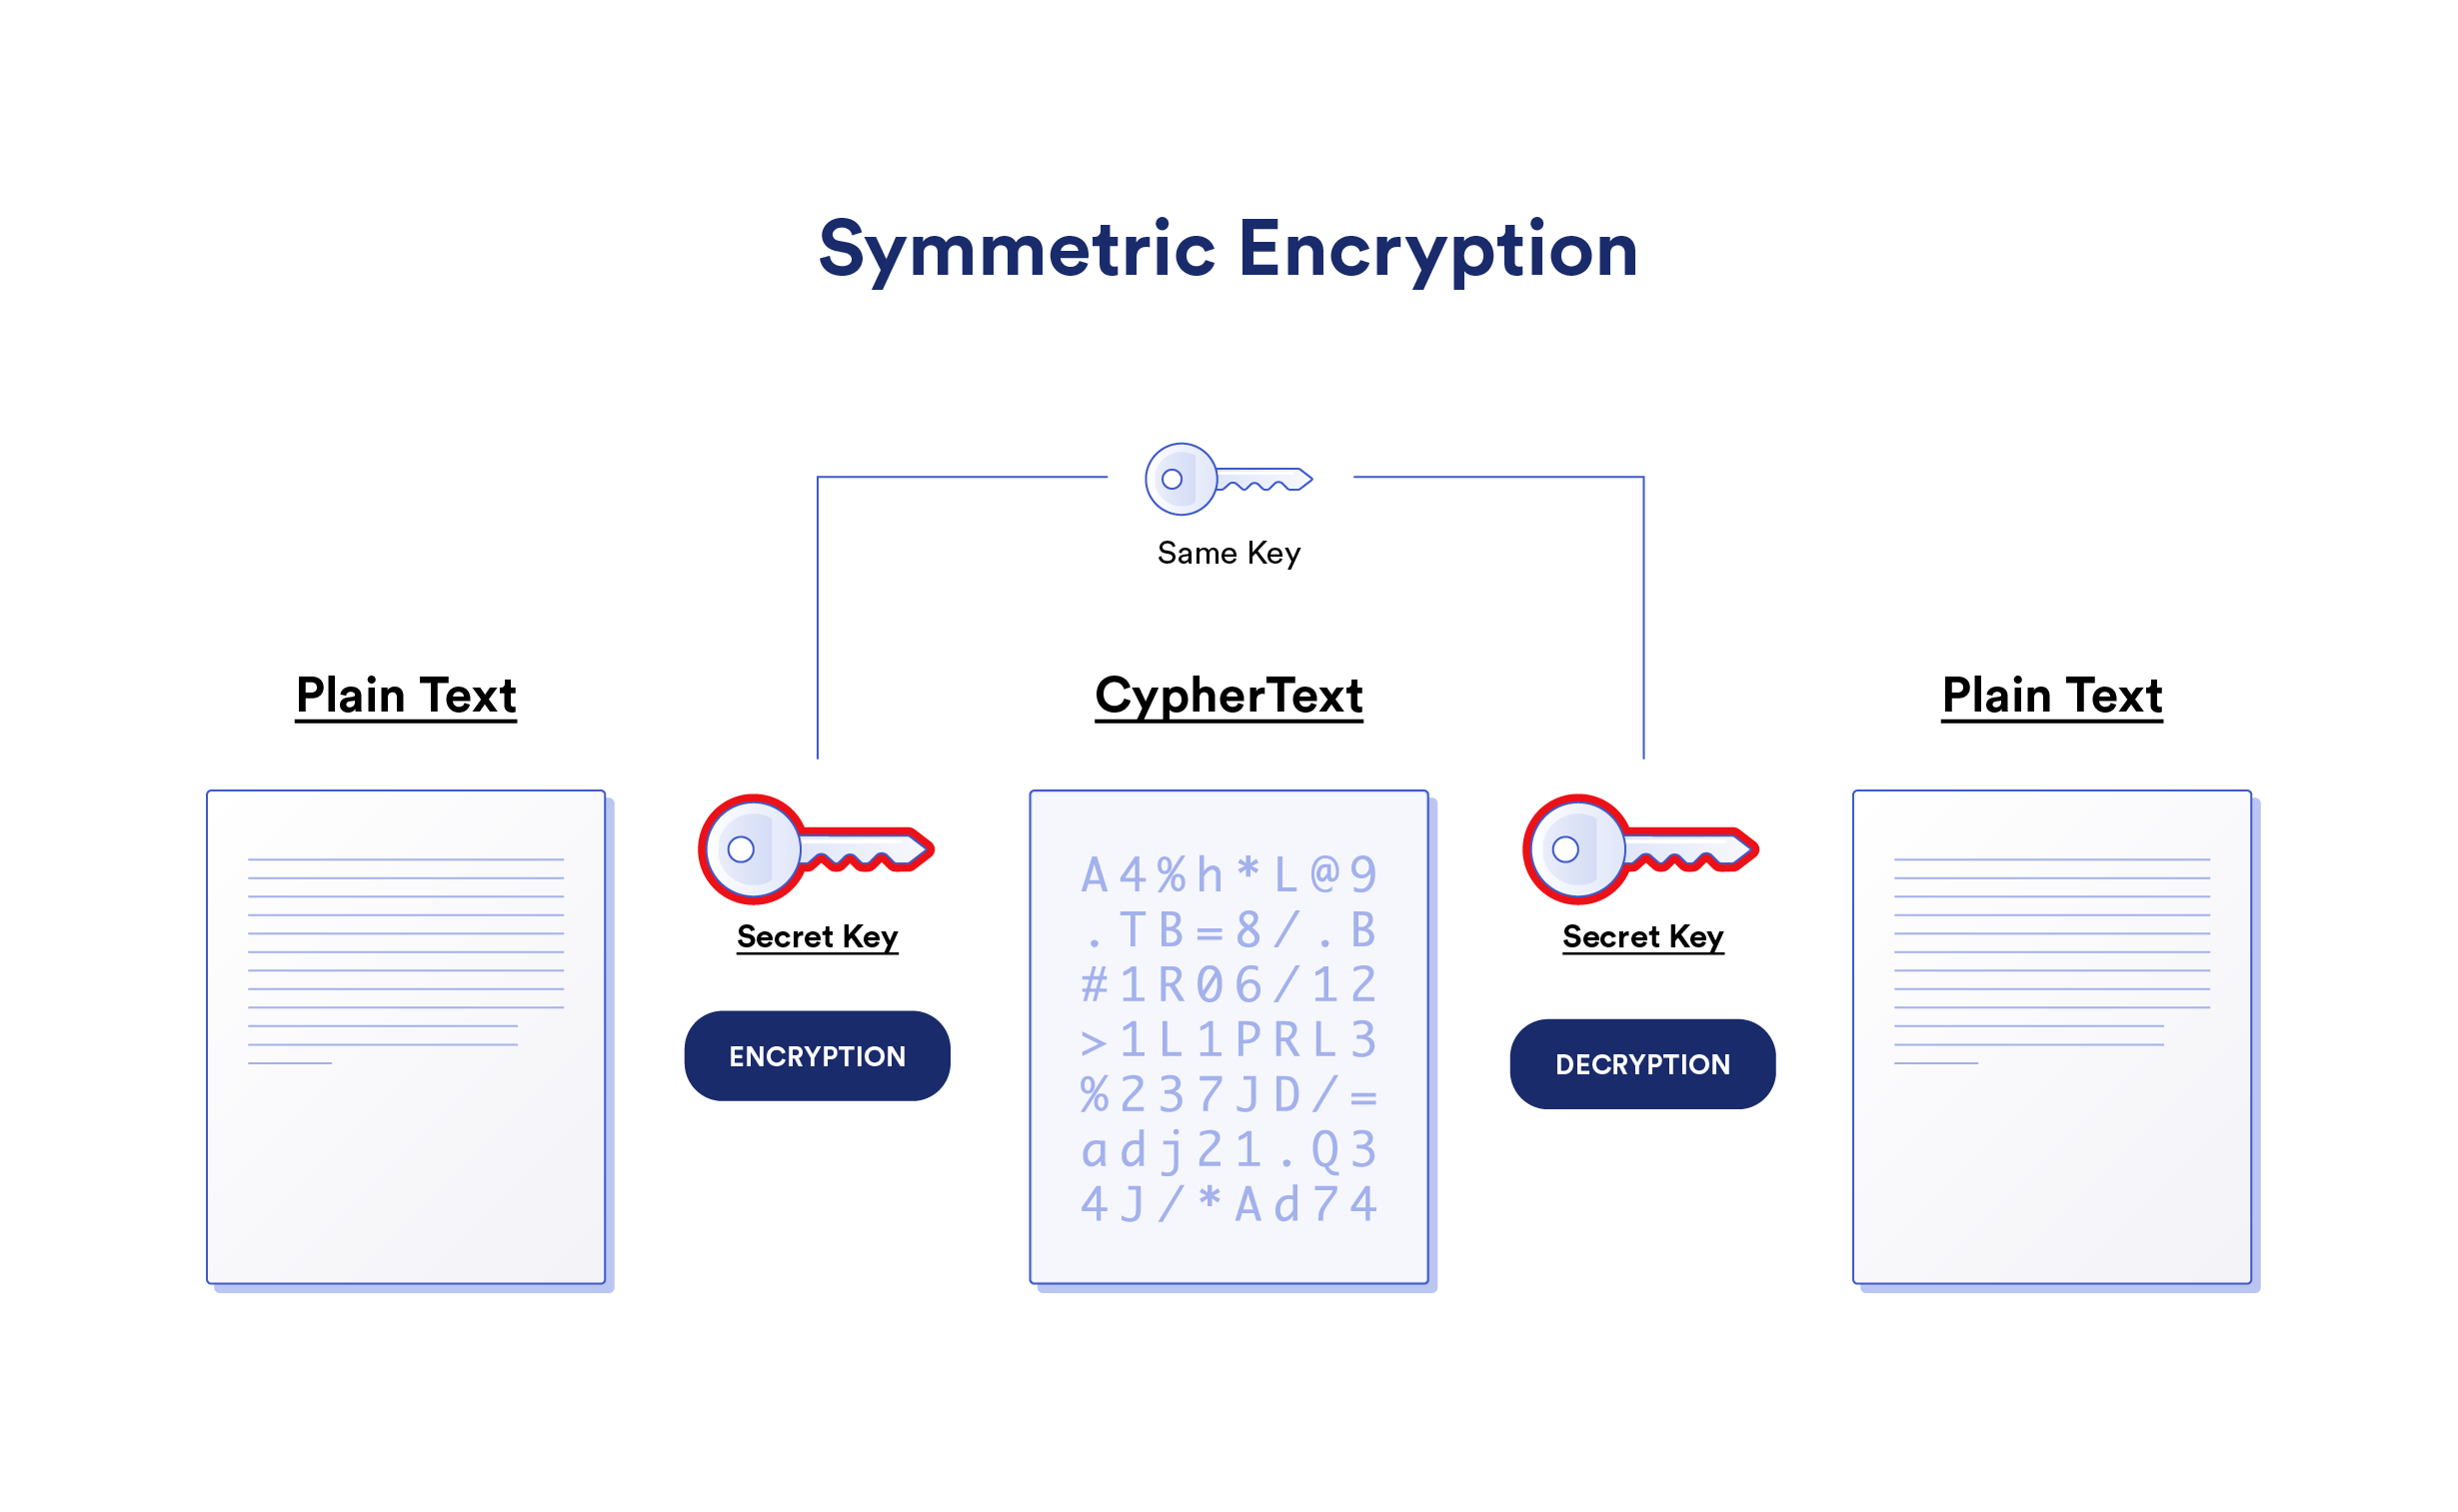 A diagram showing how symmetric key encryption works. 